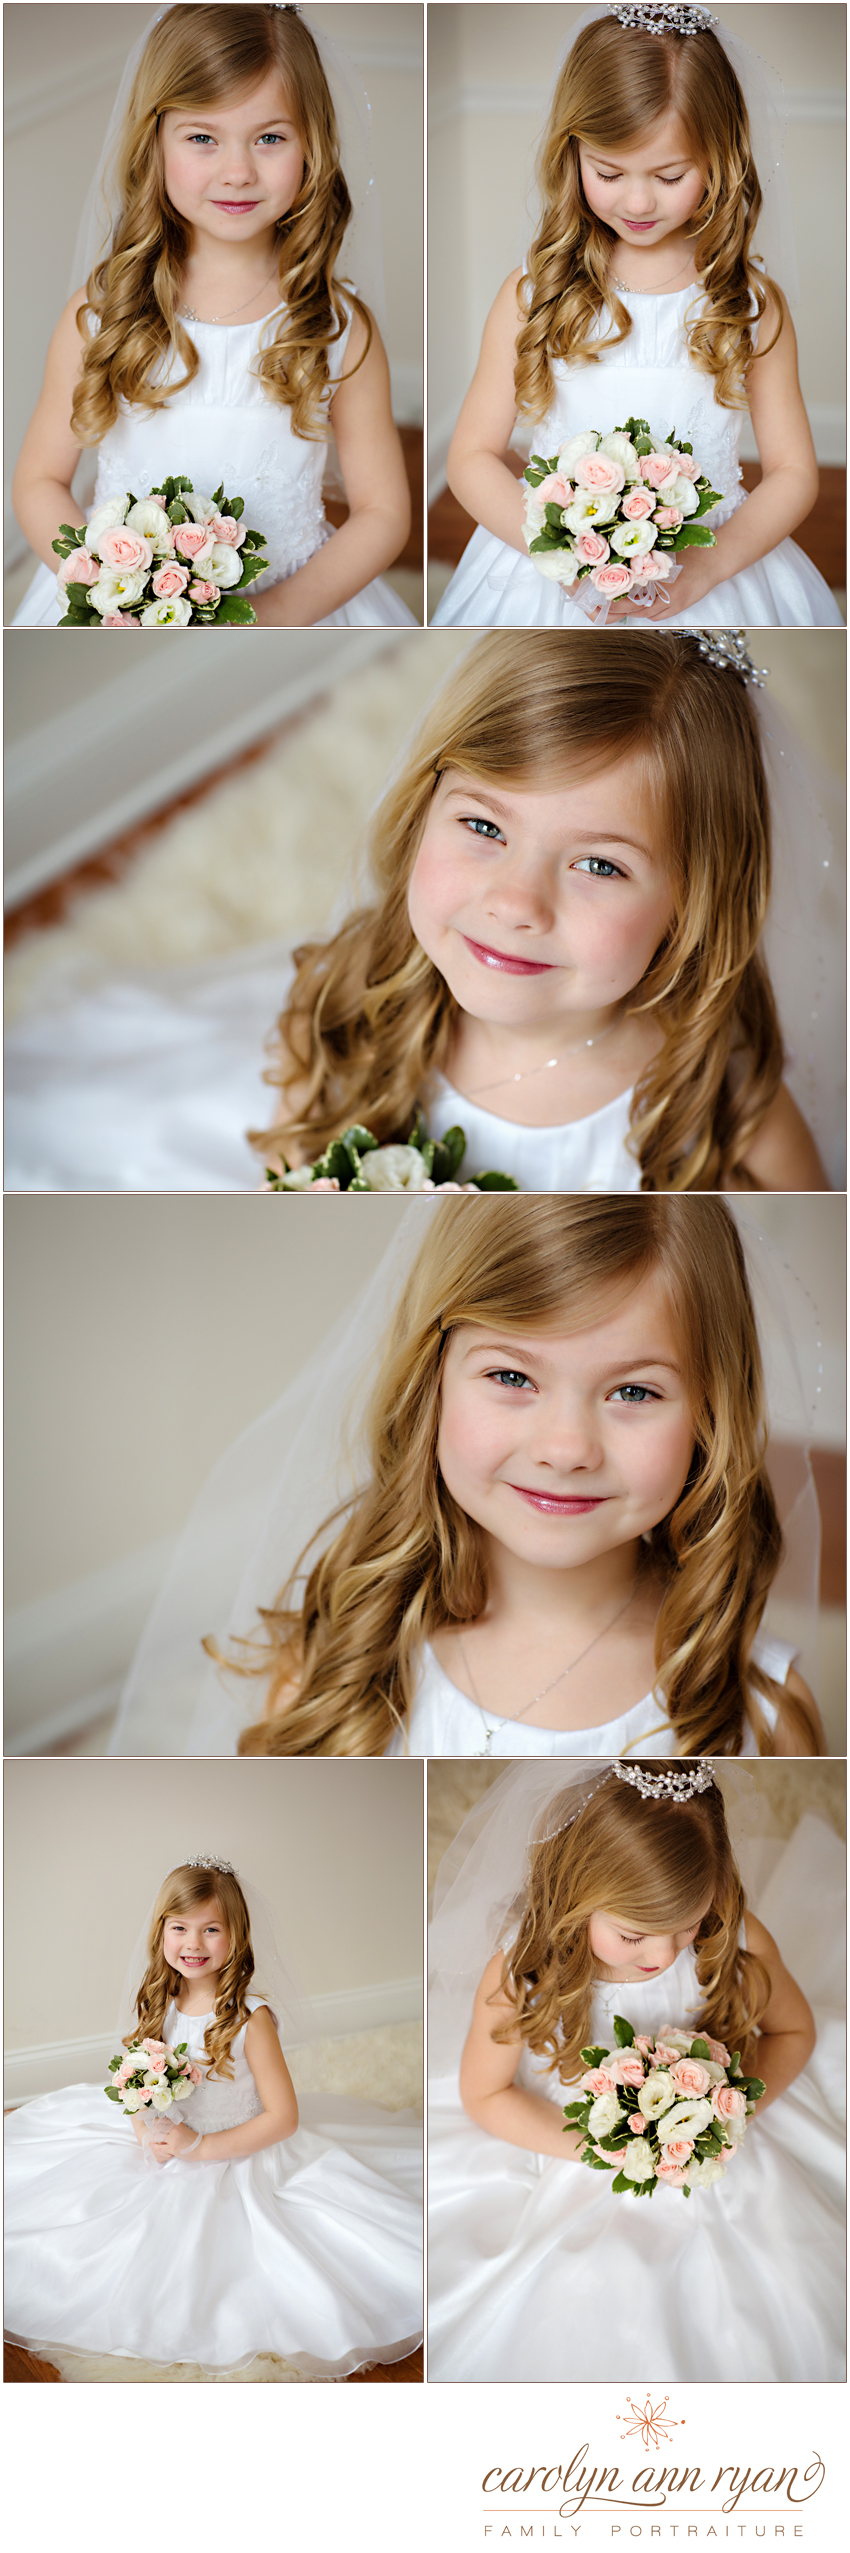 Carolyn Ann Ryan photographs 8 year old for communion portraits 